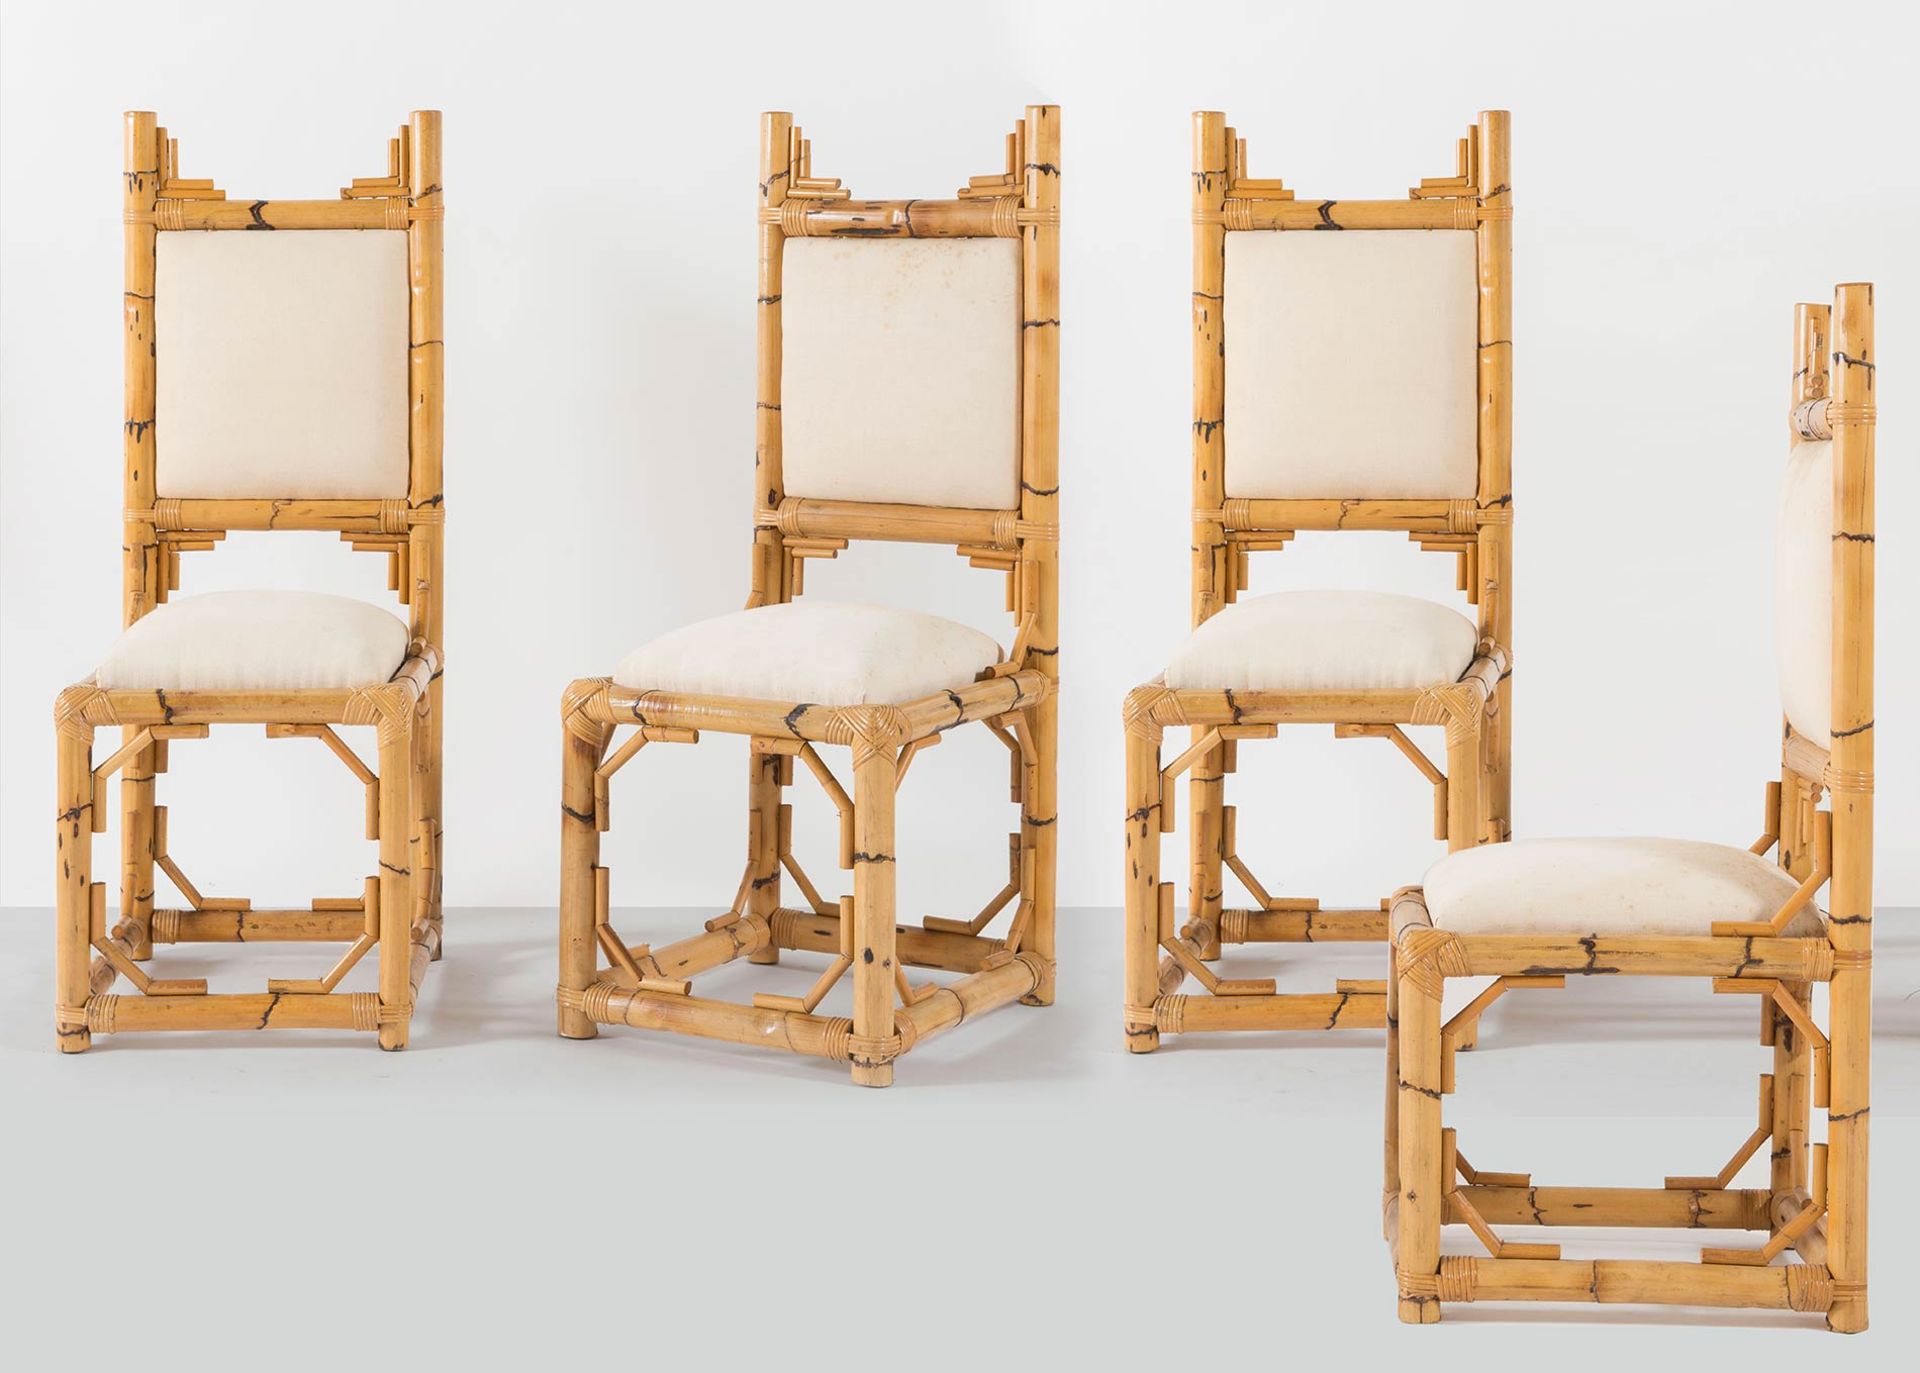 Arpex, Quattro sedie in bambù serie “Macuba”, Roma, Anni ‘70.